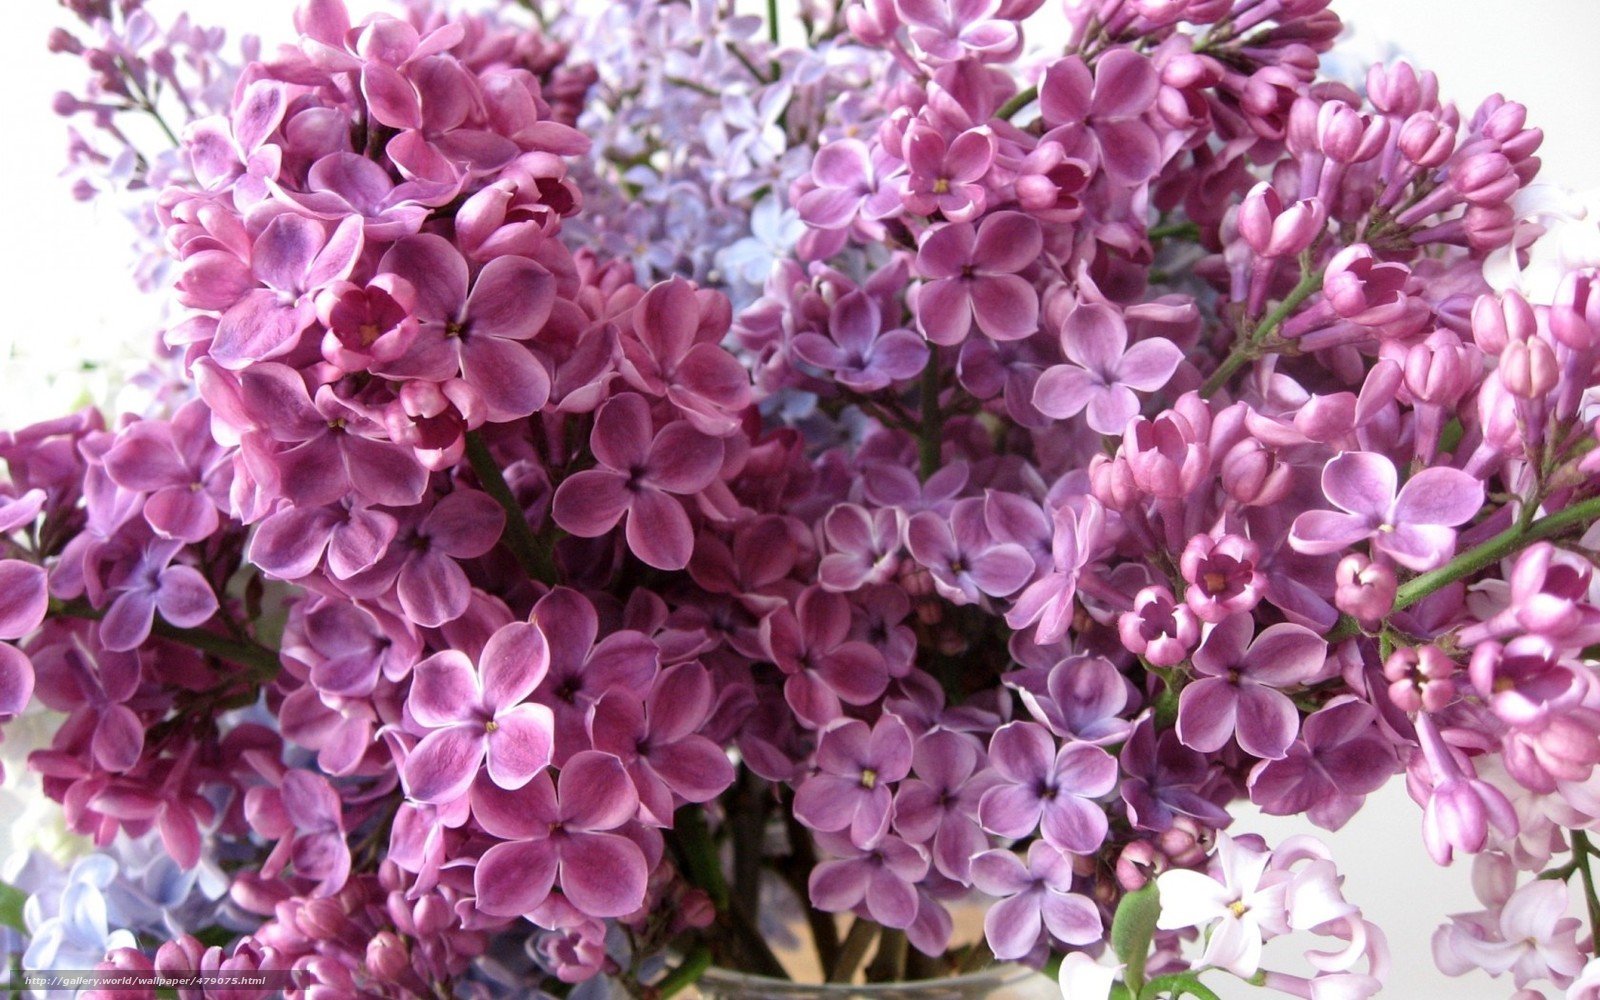 Download wallpaper Petals lilac Flowers free desktop wallpaper in